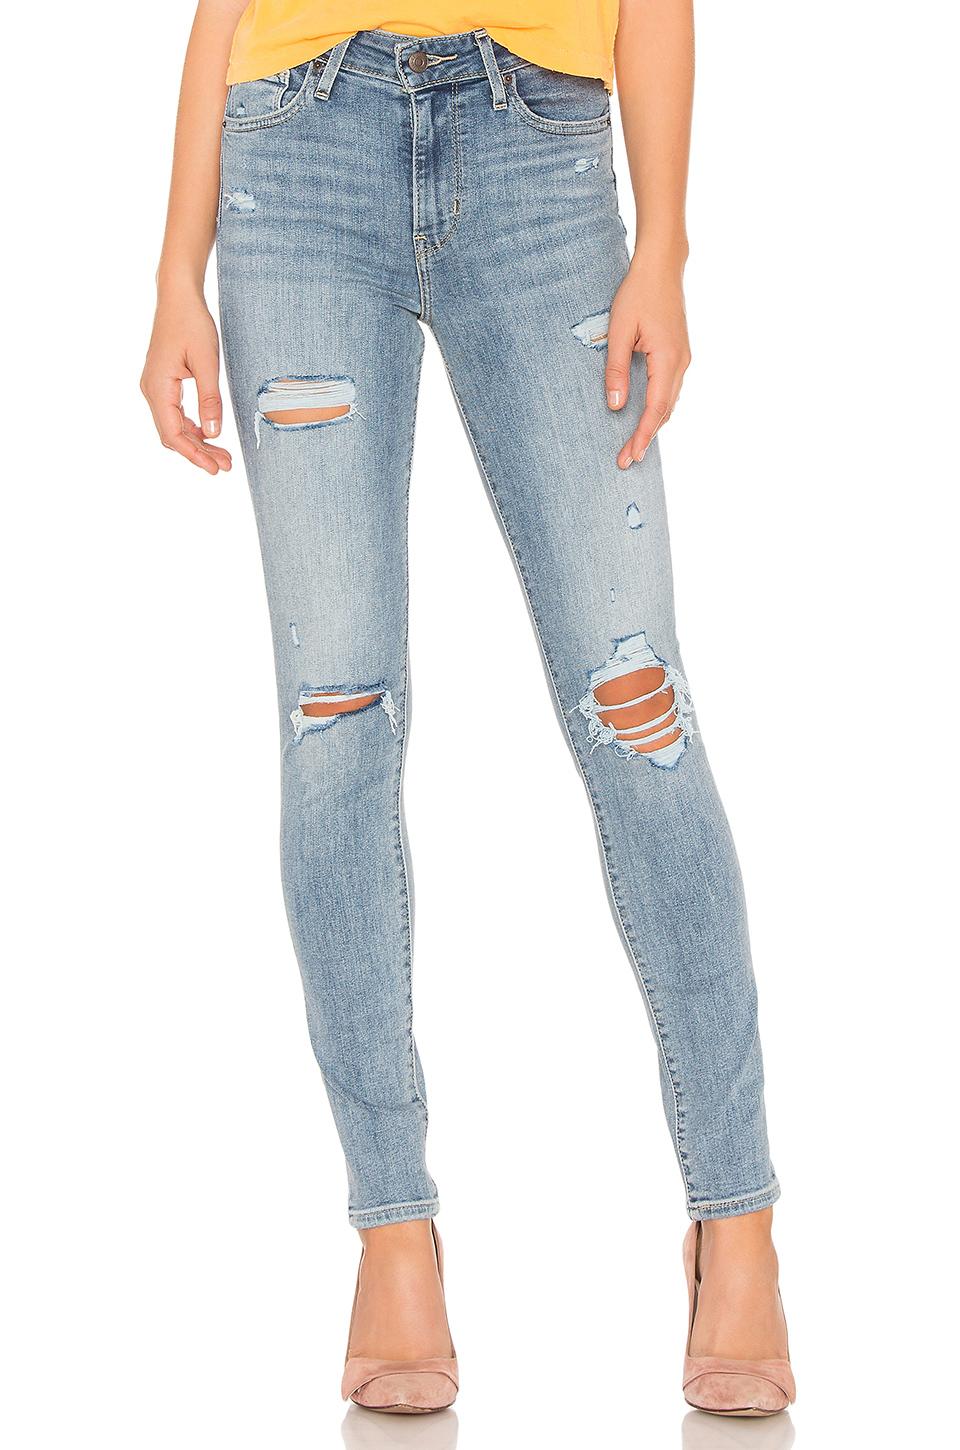 721 Tm High Waisted Skinny Jeans